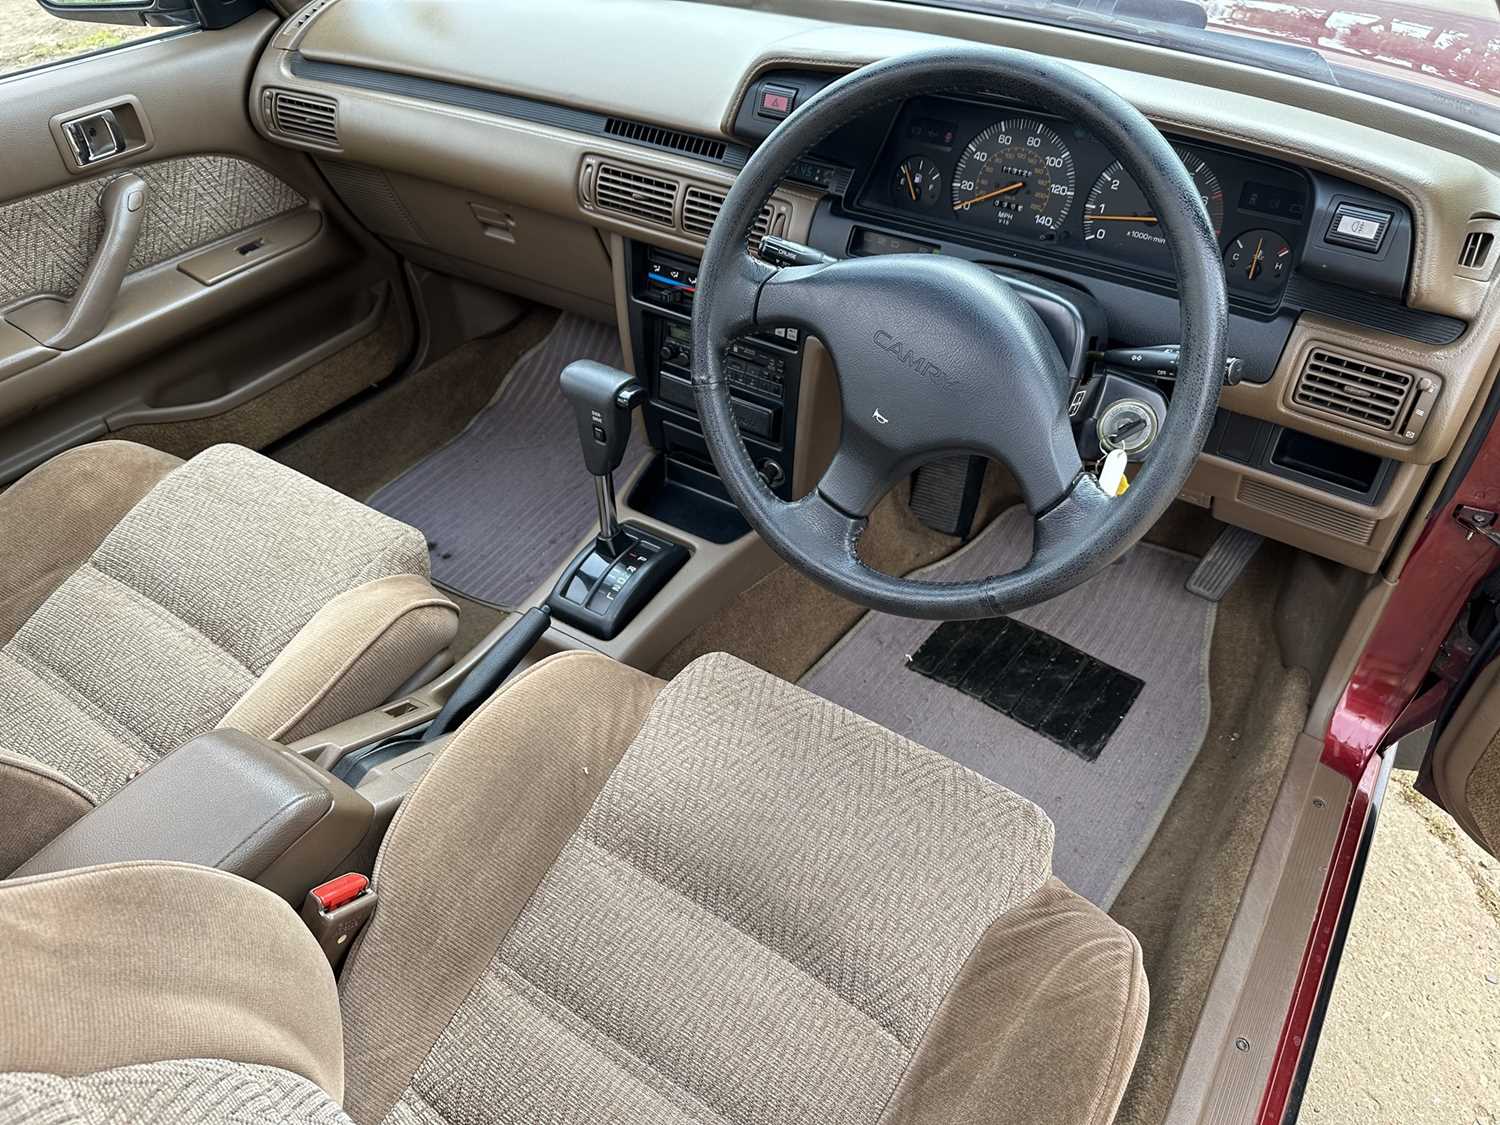 1988 Toyota Camry GLI Executive 1998cc, 4 door saloon, automatic, reg. no. F720 KVW - Image 15 of 26